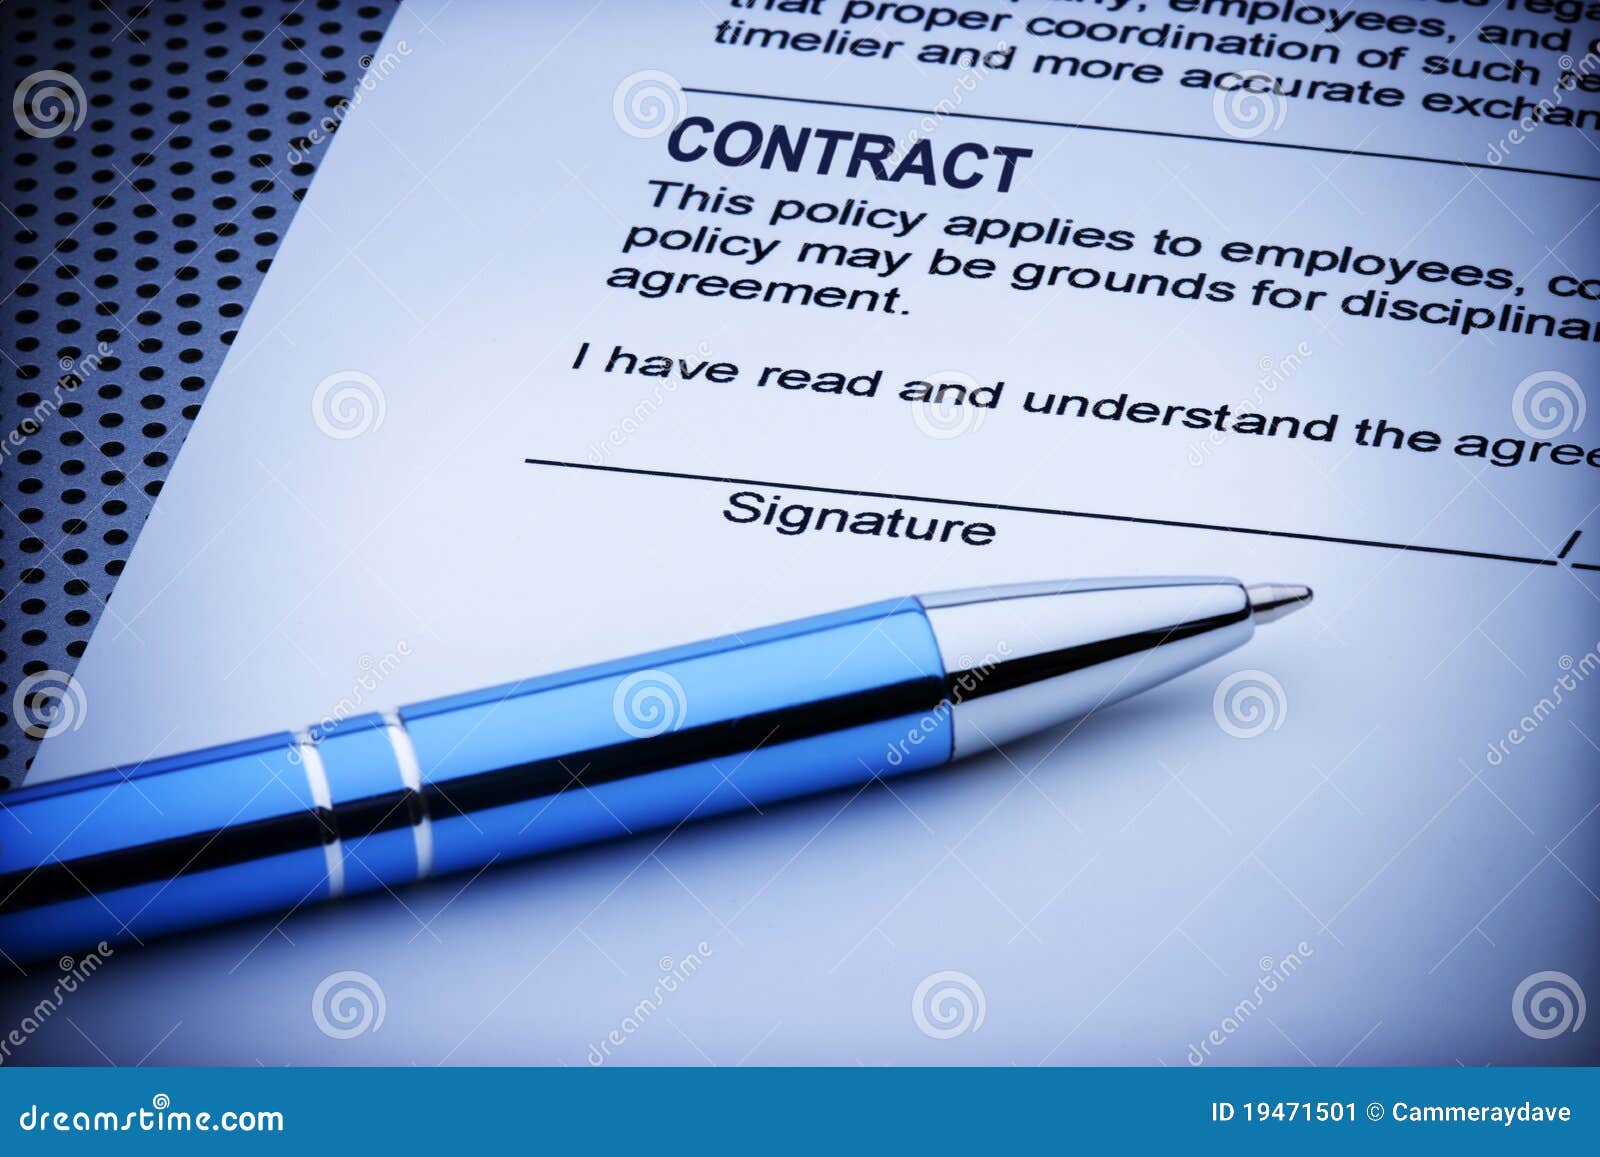 contract signature document